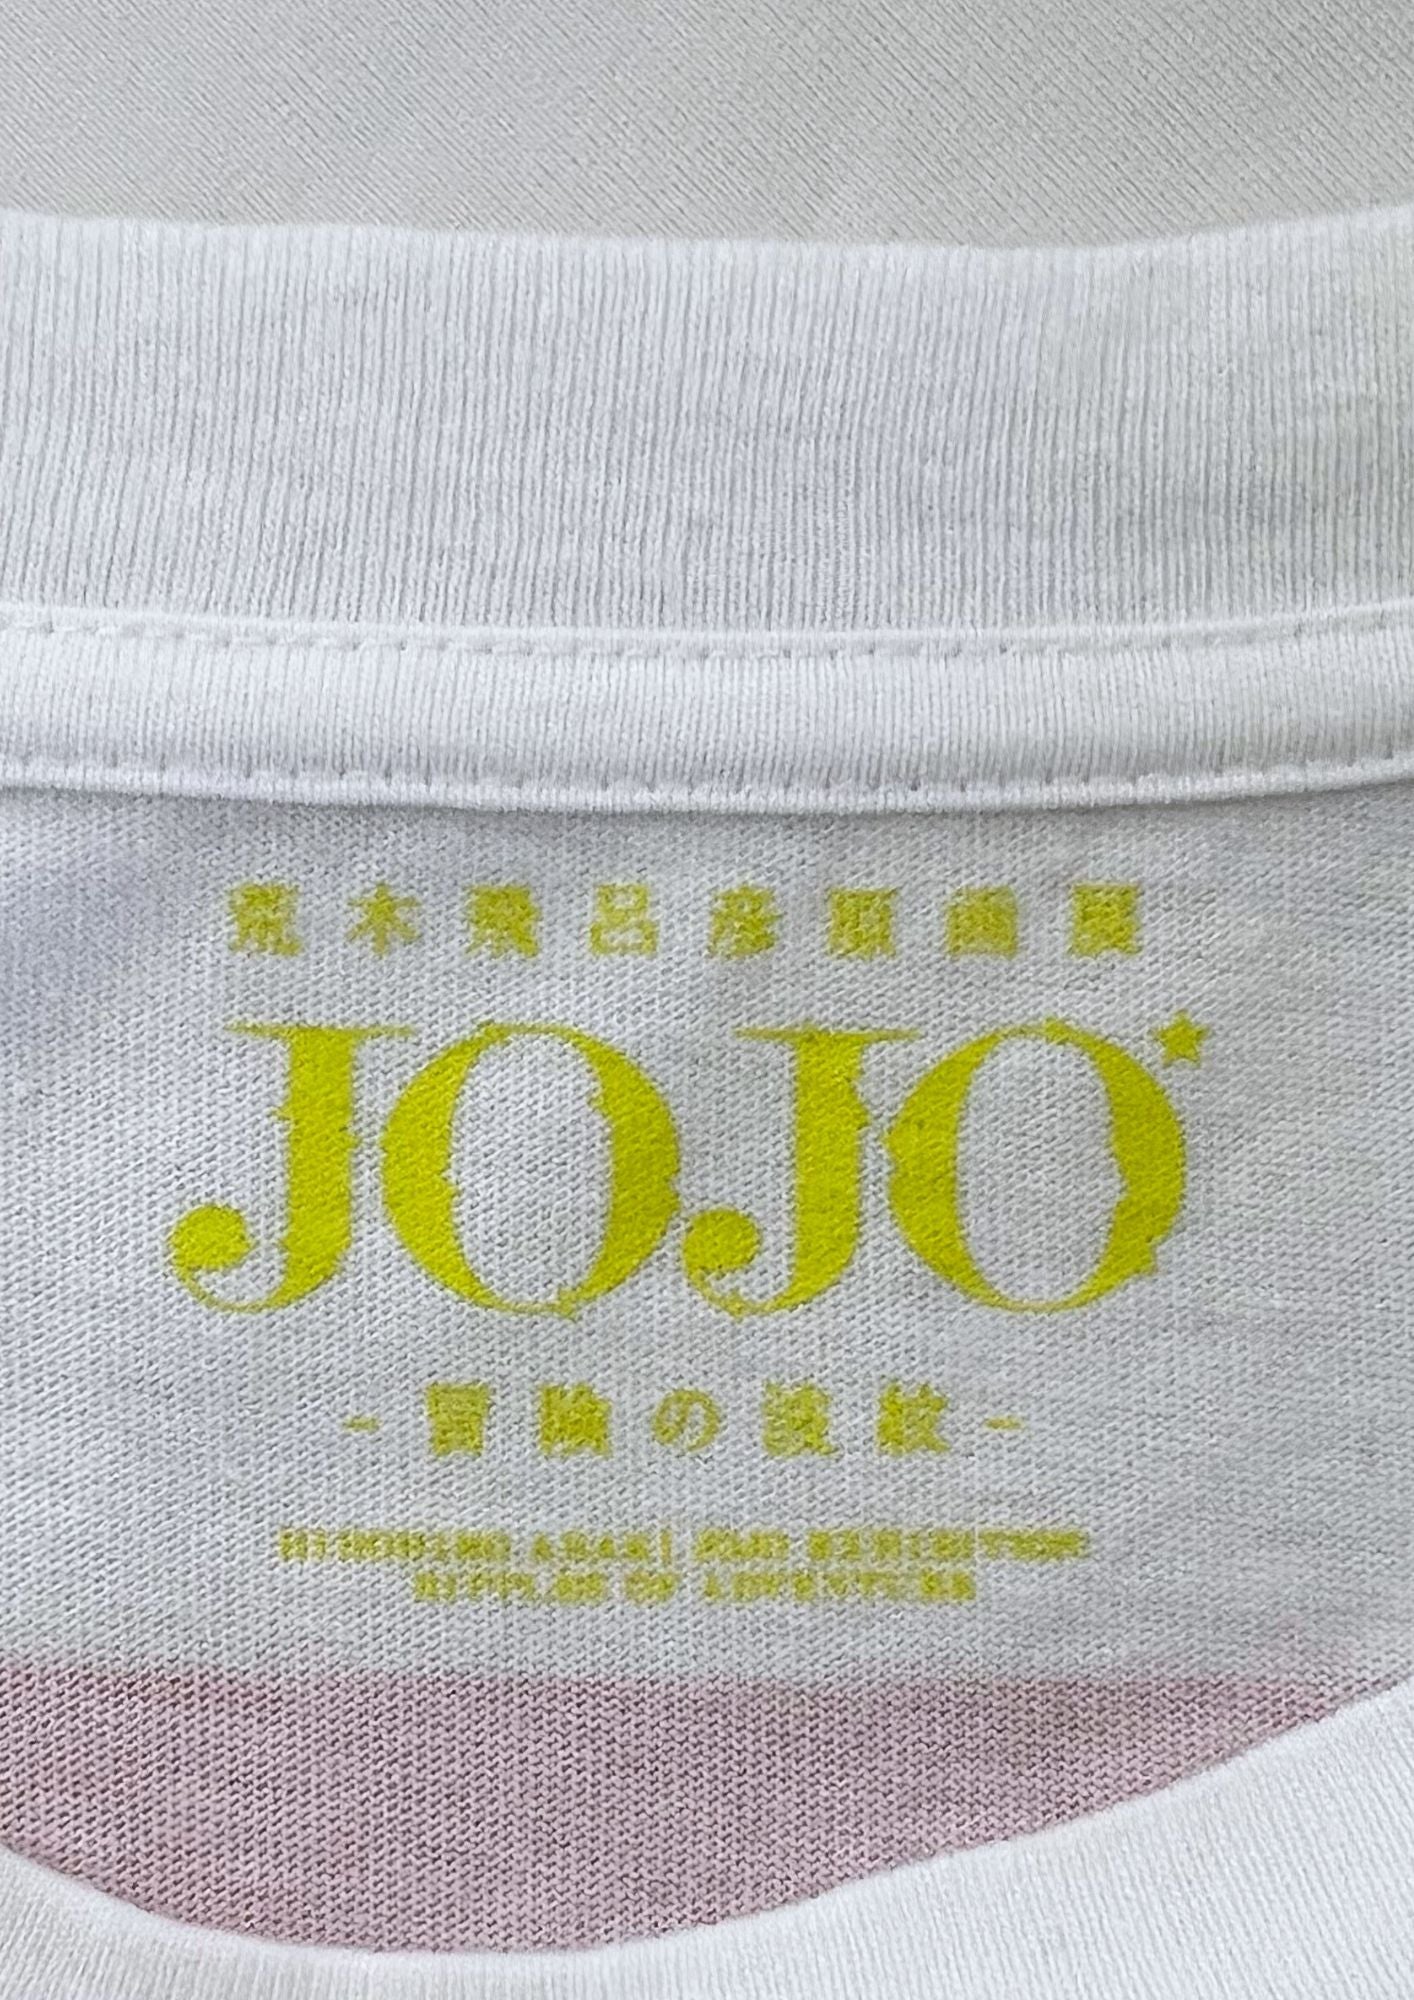 2017 JoJo's Bizarre Adventure x Hirohiko Araki 2017 Exhibition Tokyo Jotaro Mt Fuji T-shirt